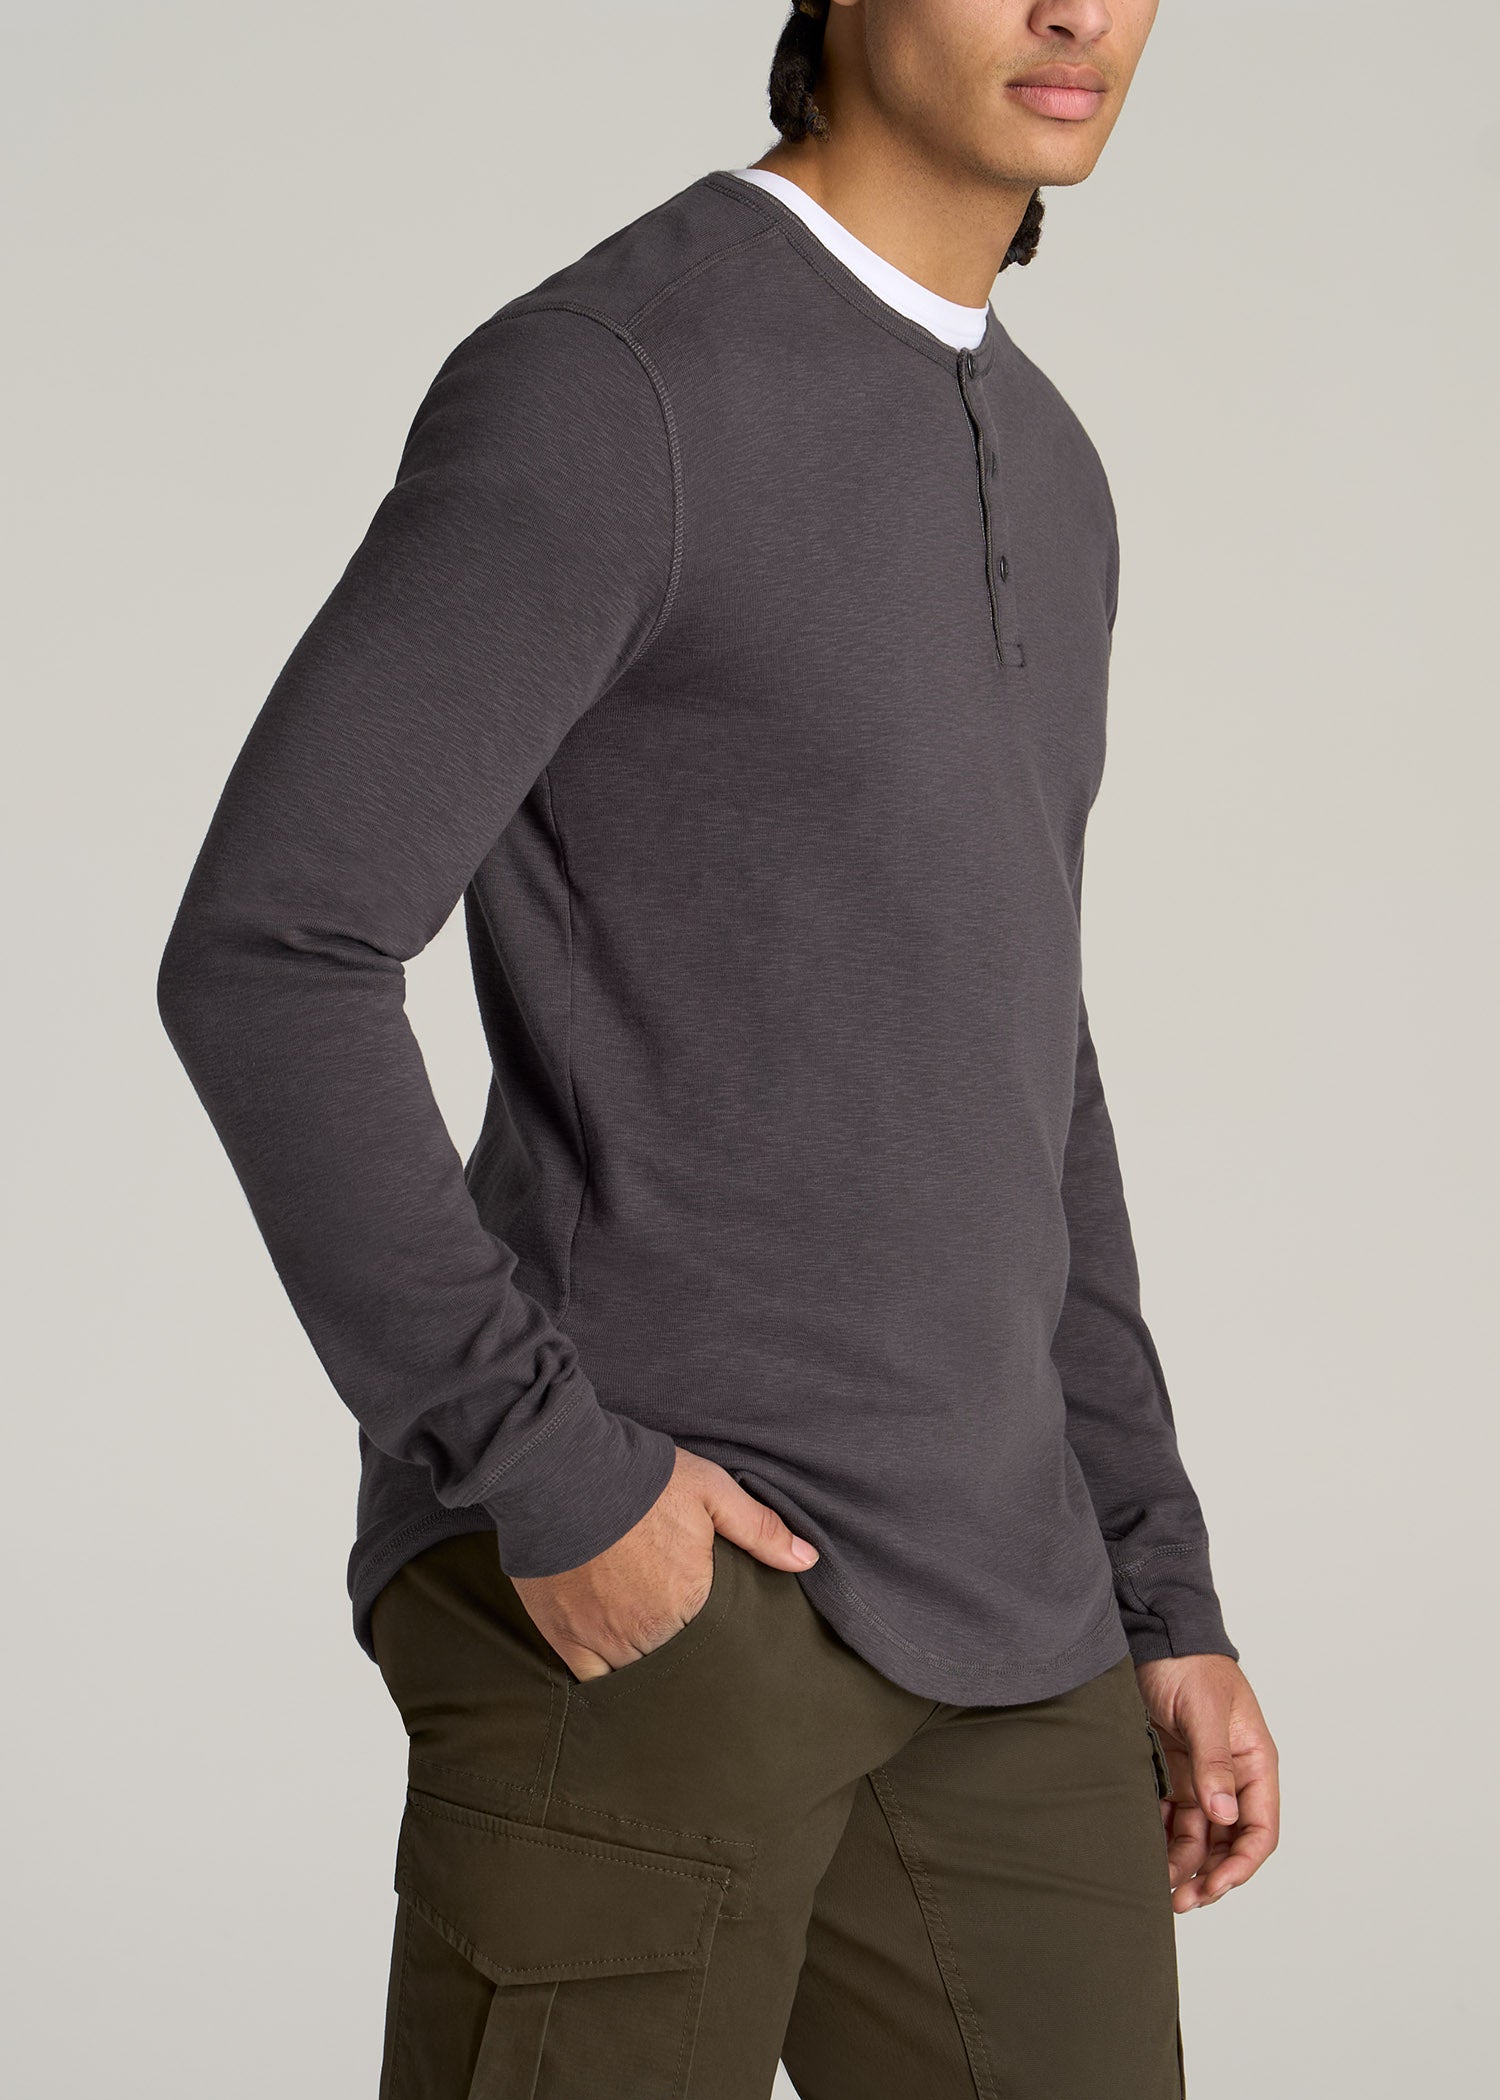 Charcoal Henley Shirt: Heavy Slub Henley Shirt for Tall Men